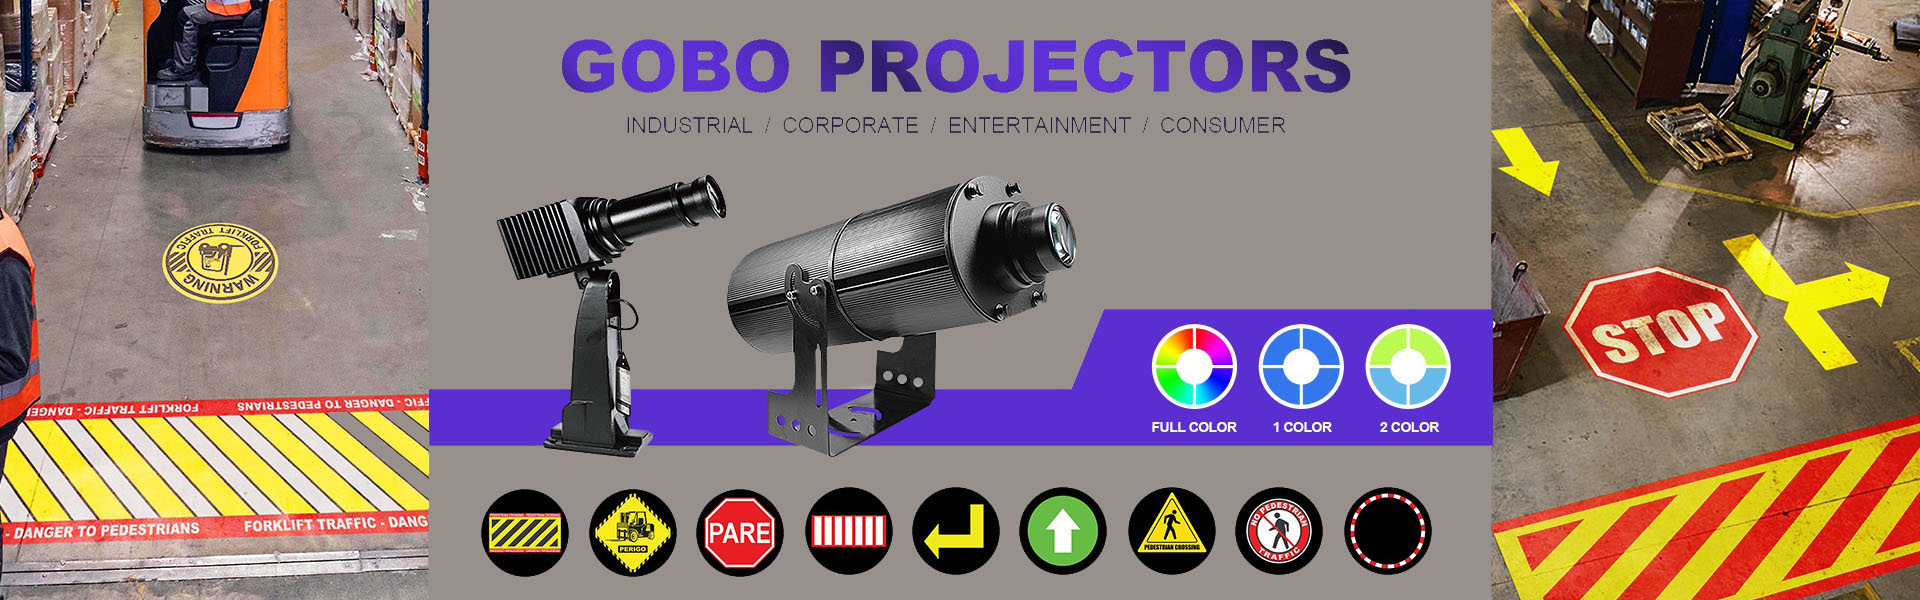 gobo logo projector,led work light,led forklift light,Wetech Electronic Technology Limited